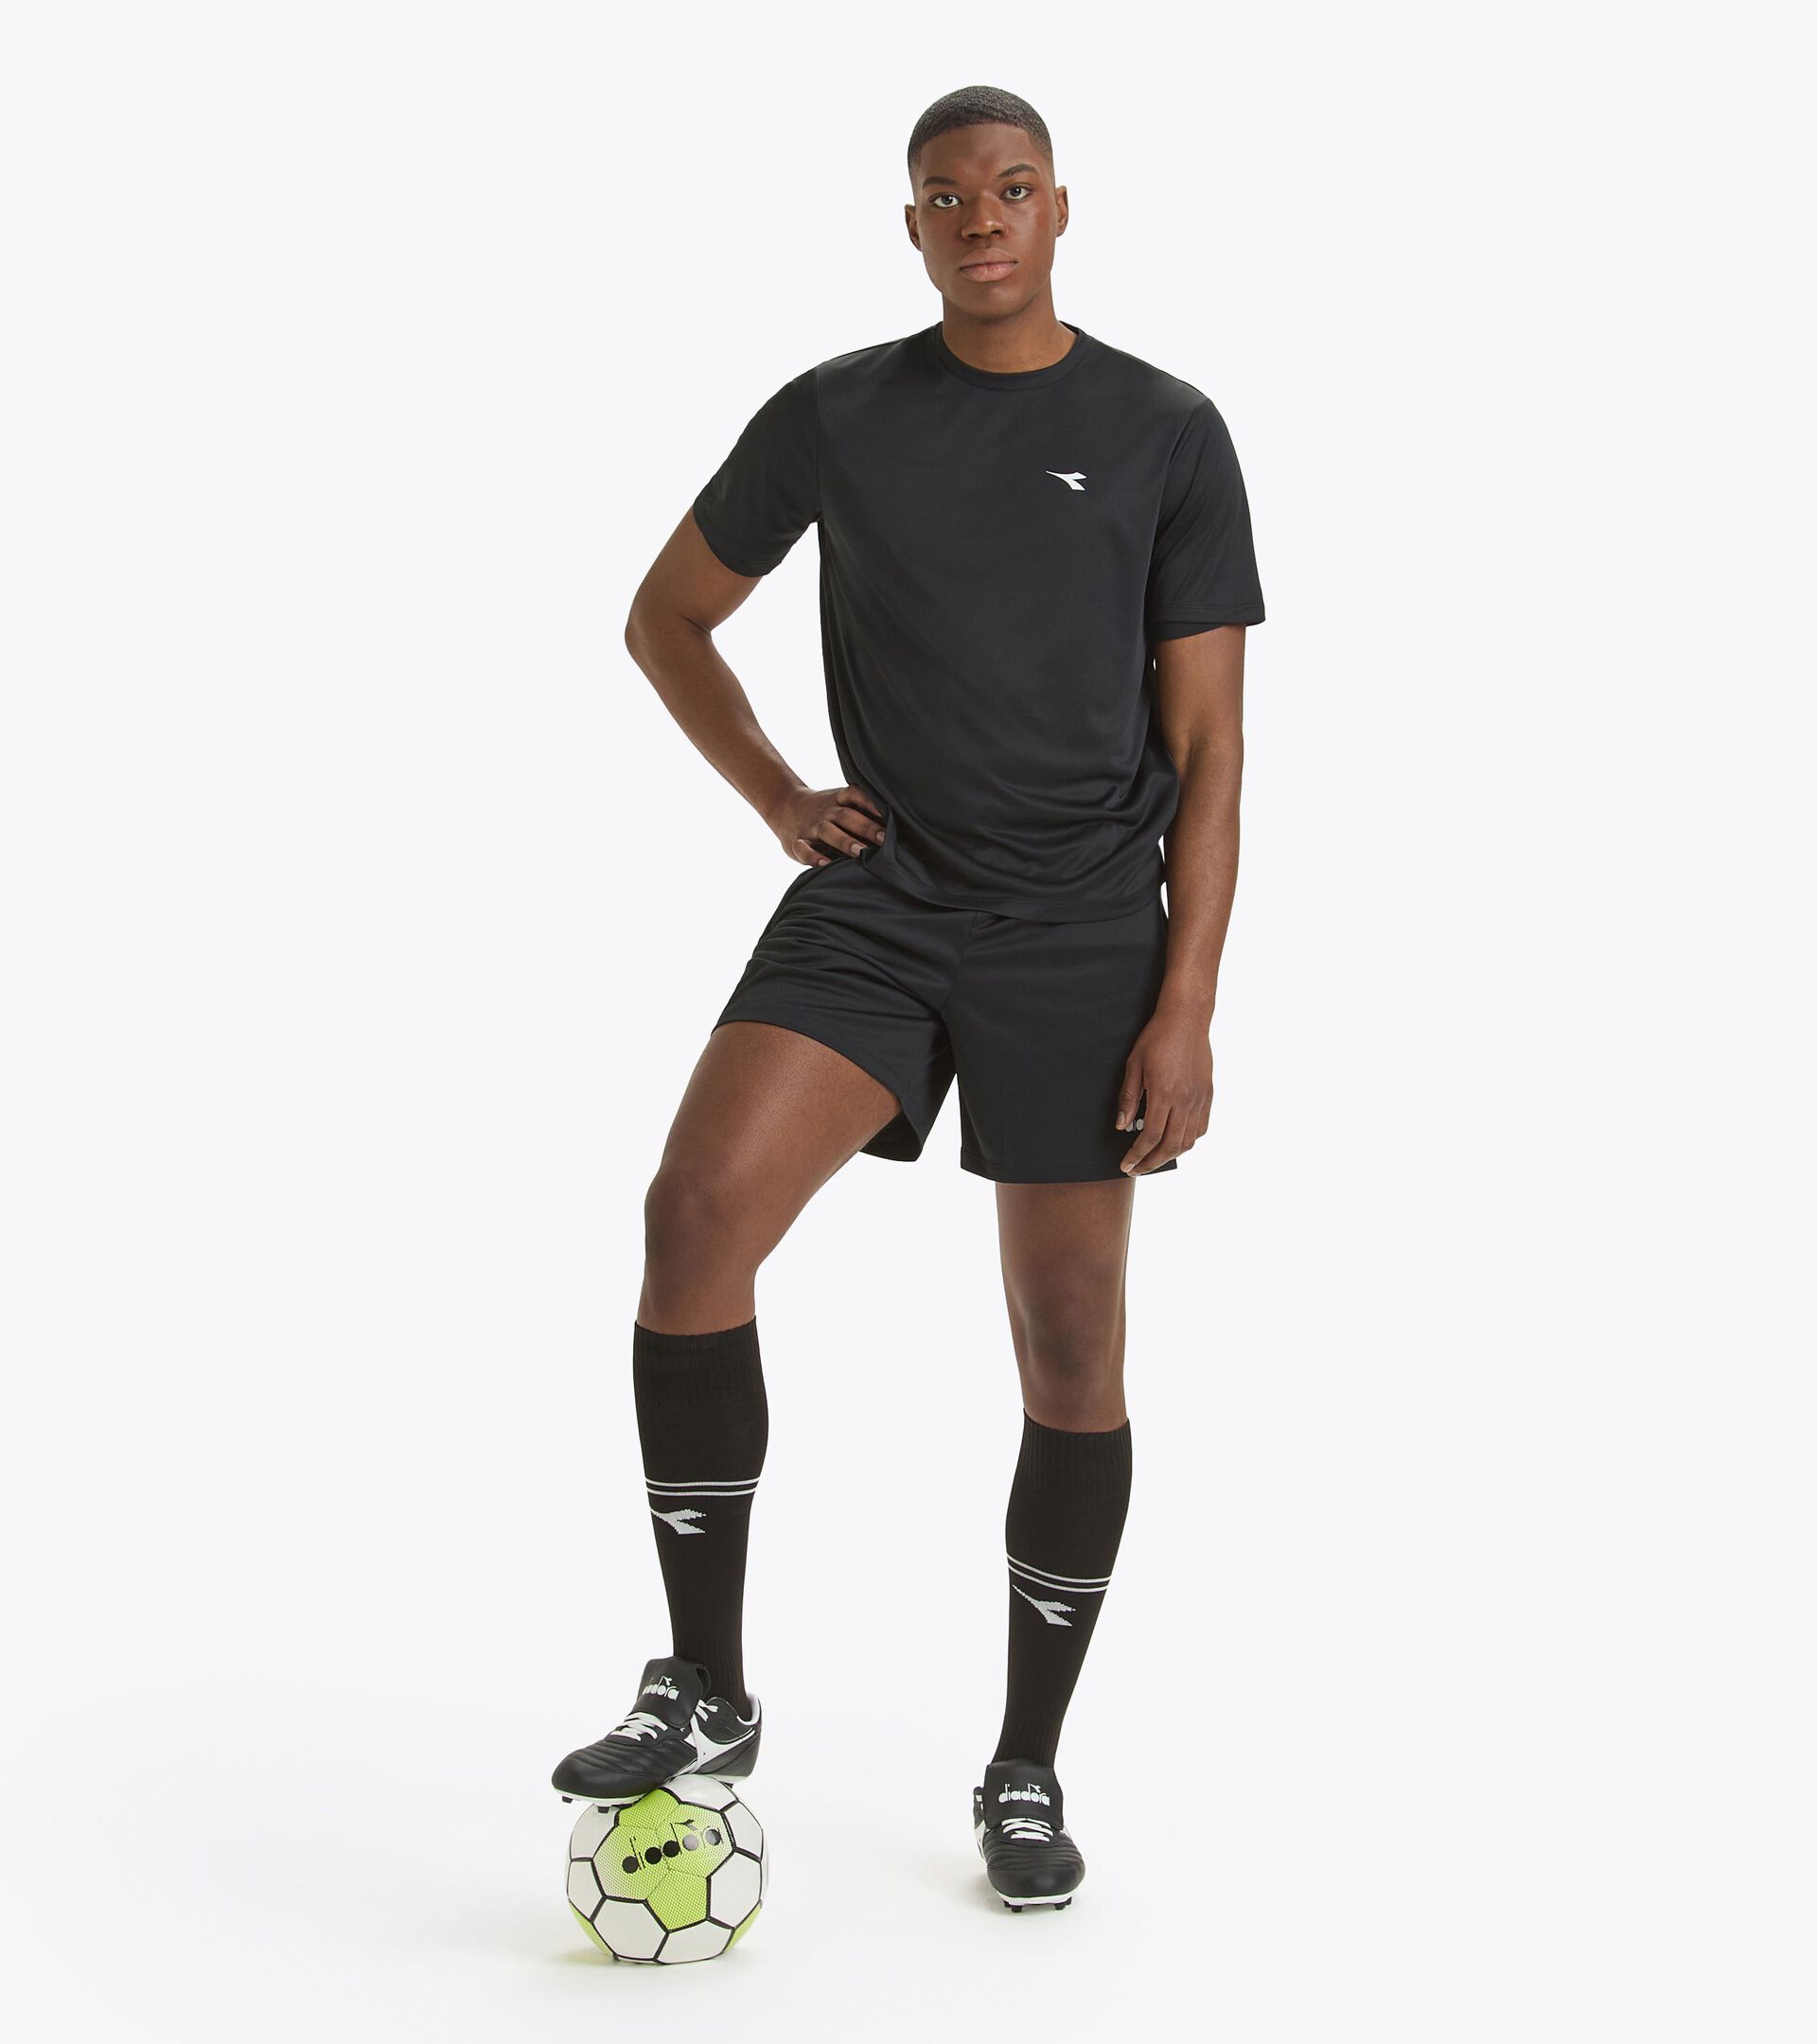 Pantalones cortos de fútbol para entrenar - Unisex TRAINING SHORT SCUDETTO NEGRO - Diadora